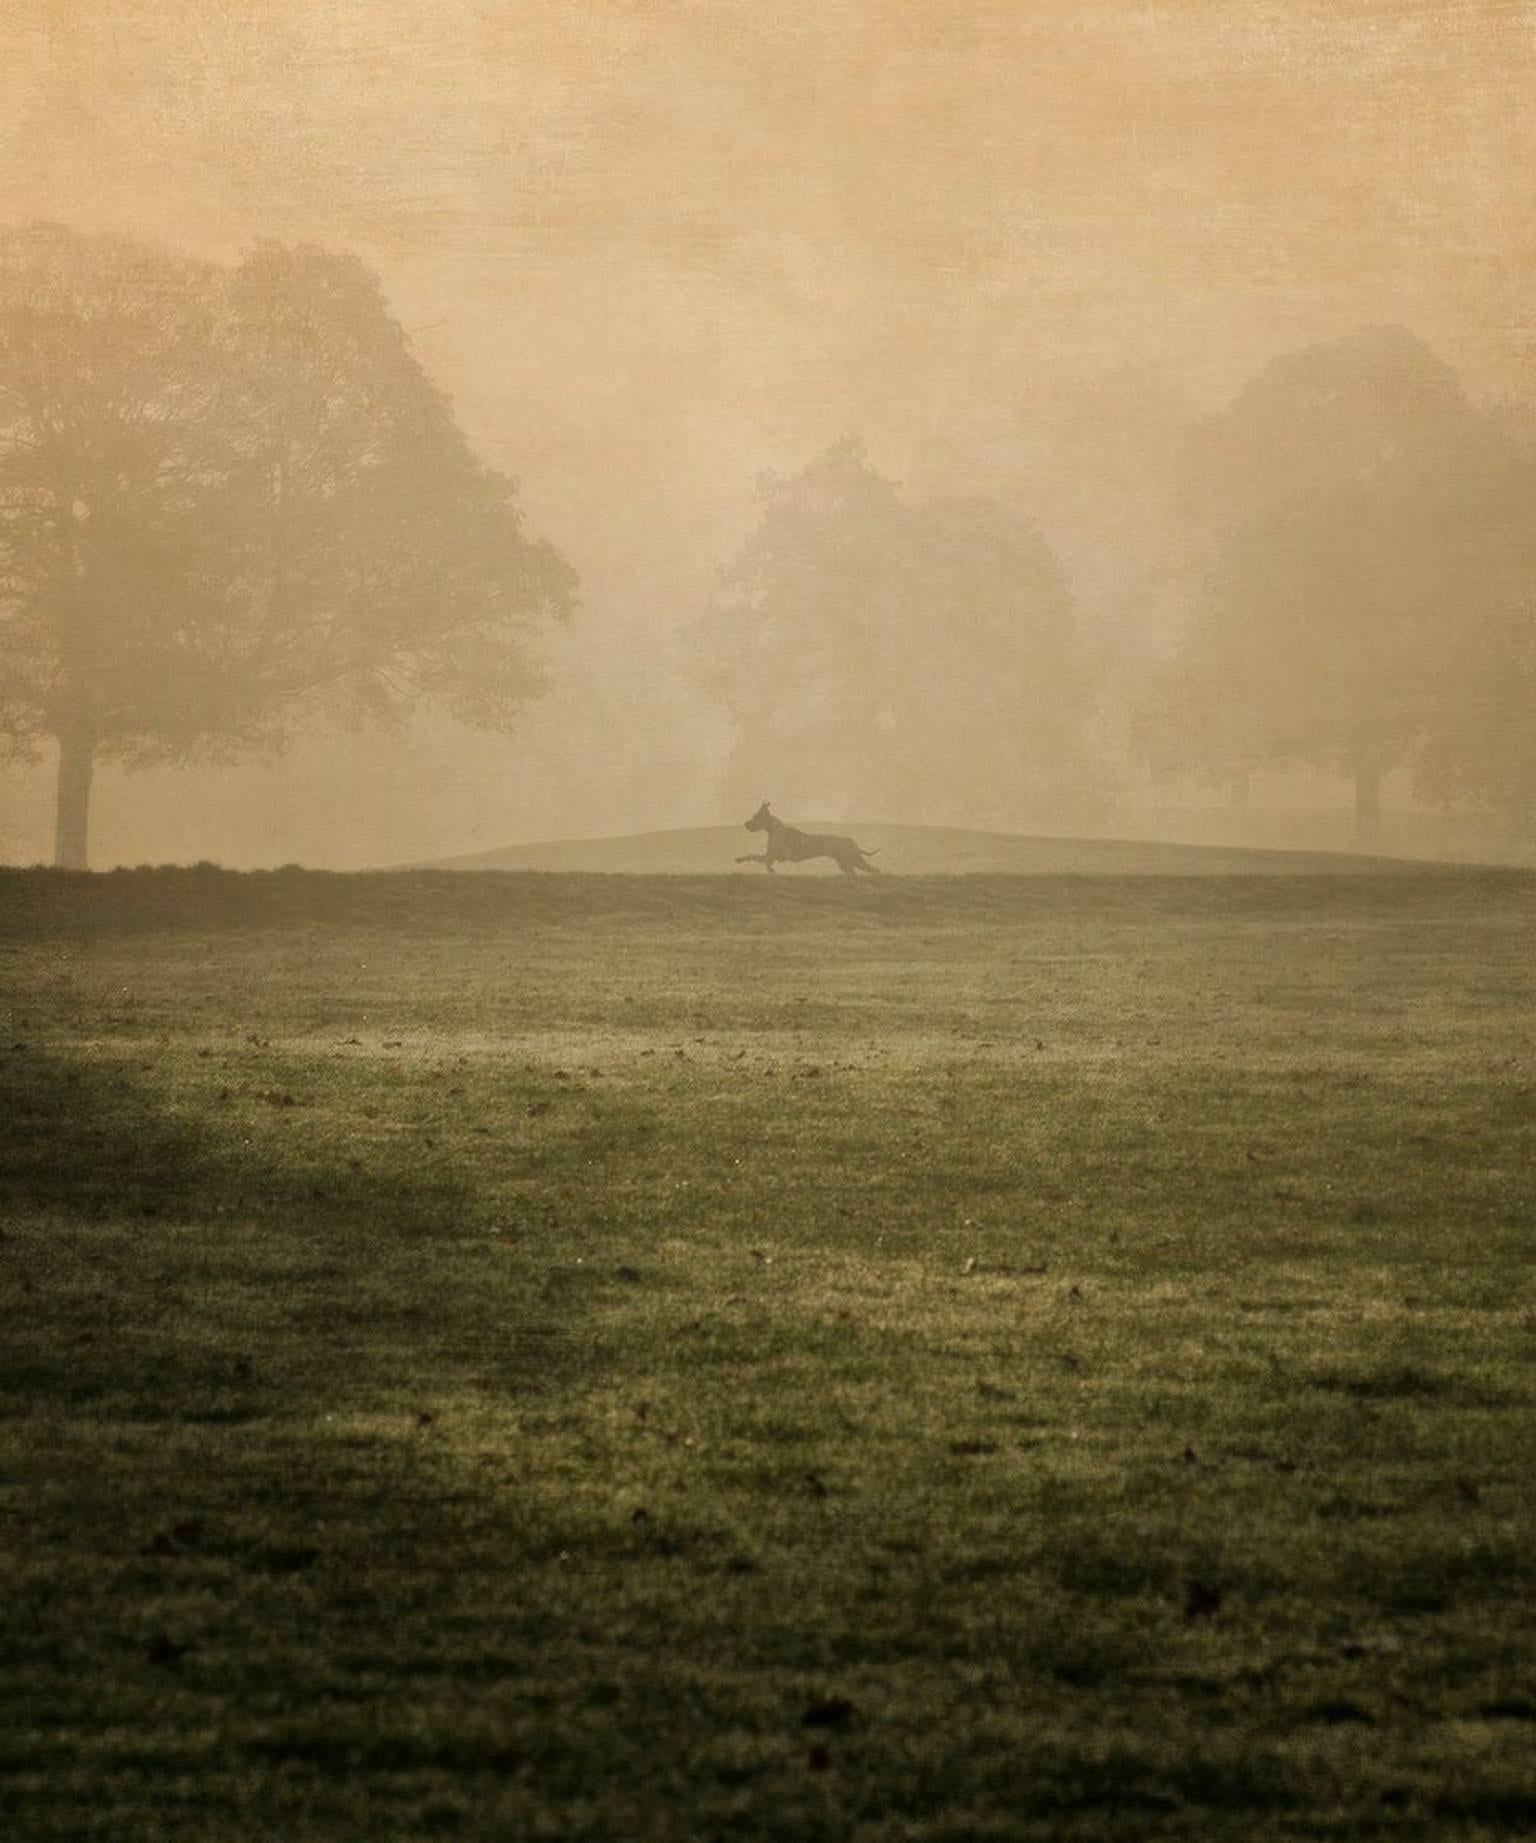 Pete Kelly Landscape Photograph - Great Dane Silhouette, Cheshire, England, 2015